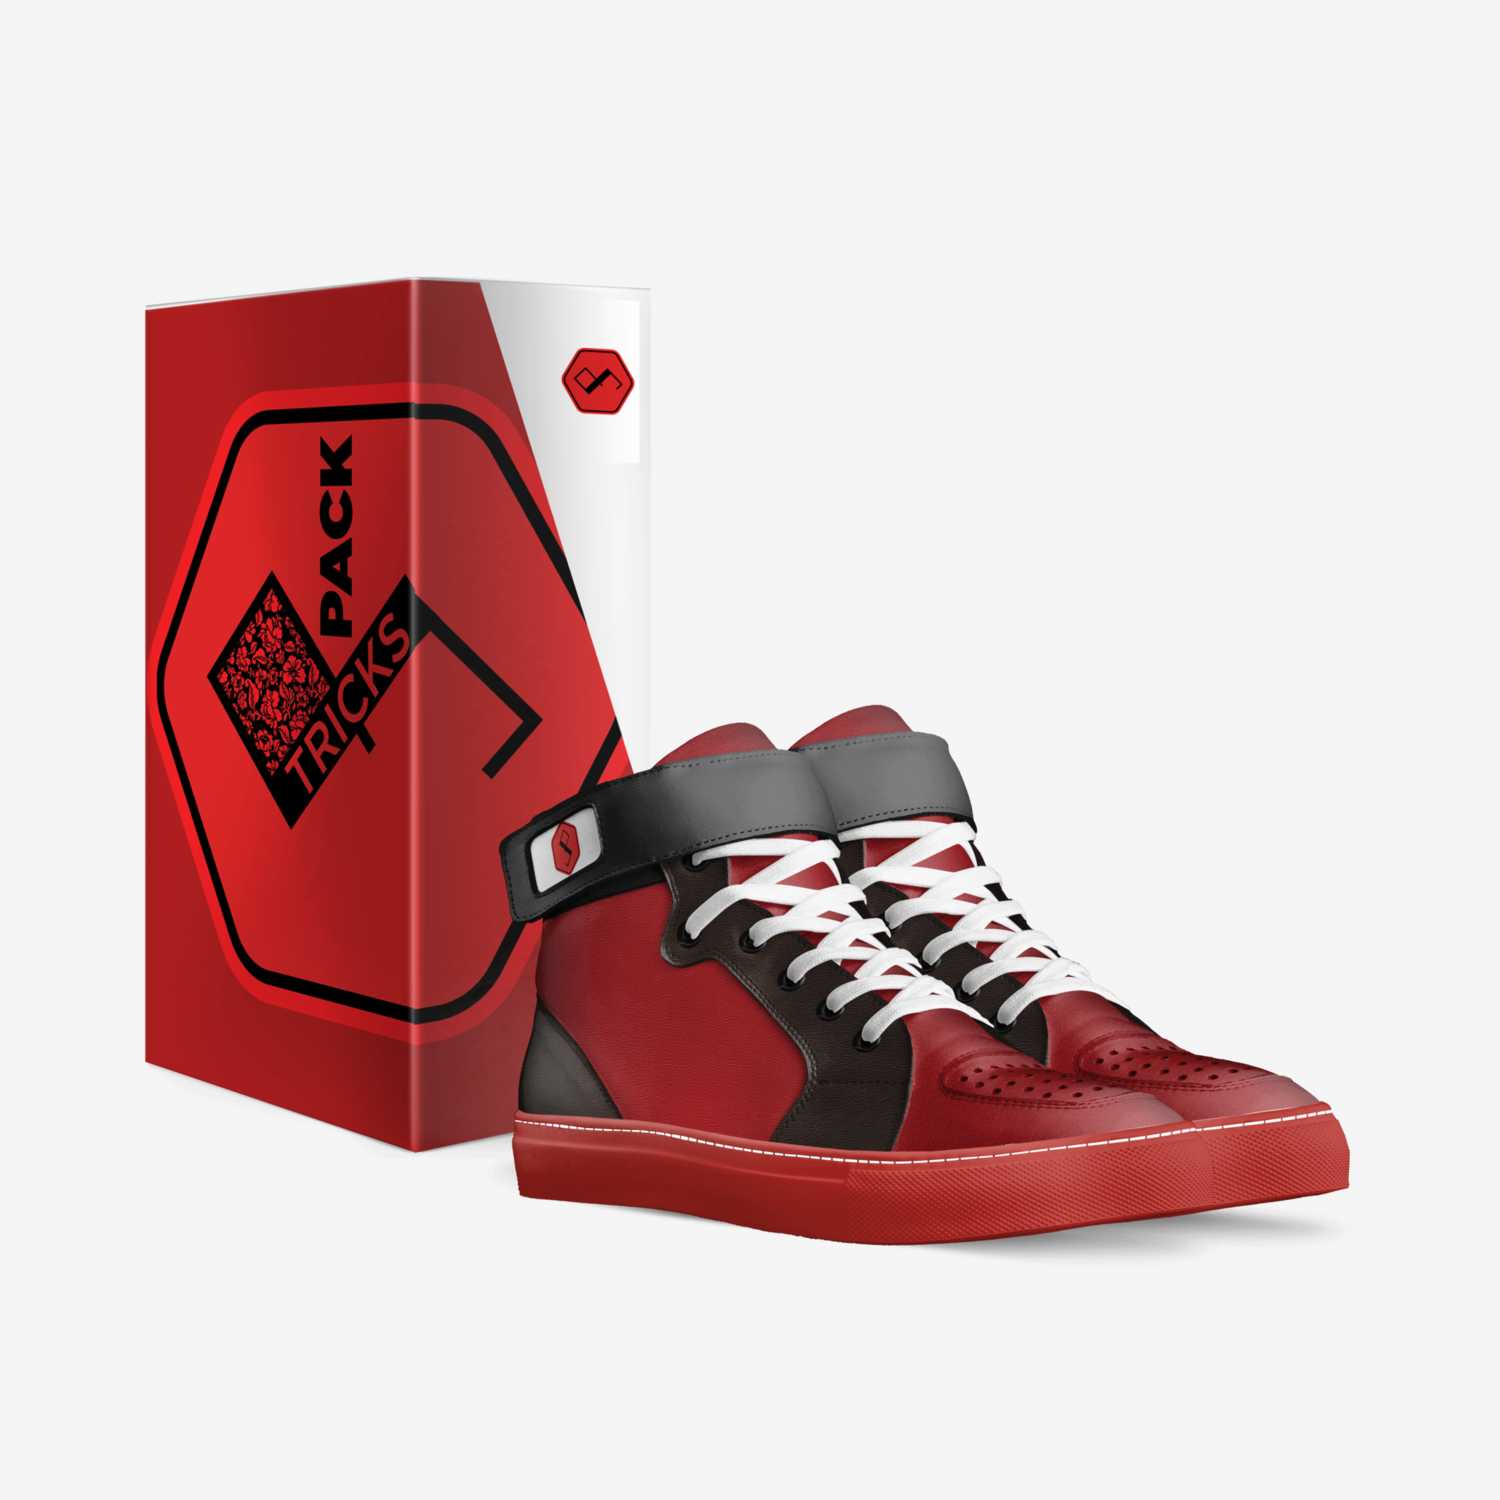 PJ_freshline custom made in Italy shoes by Patrick Jørgensen | Box view